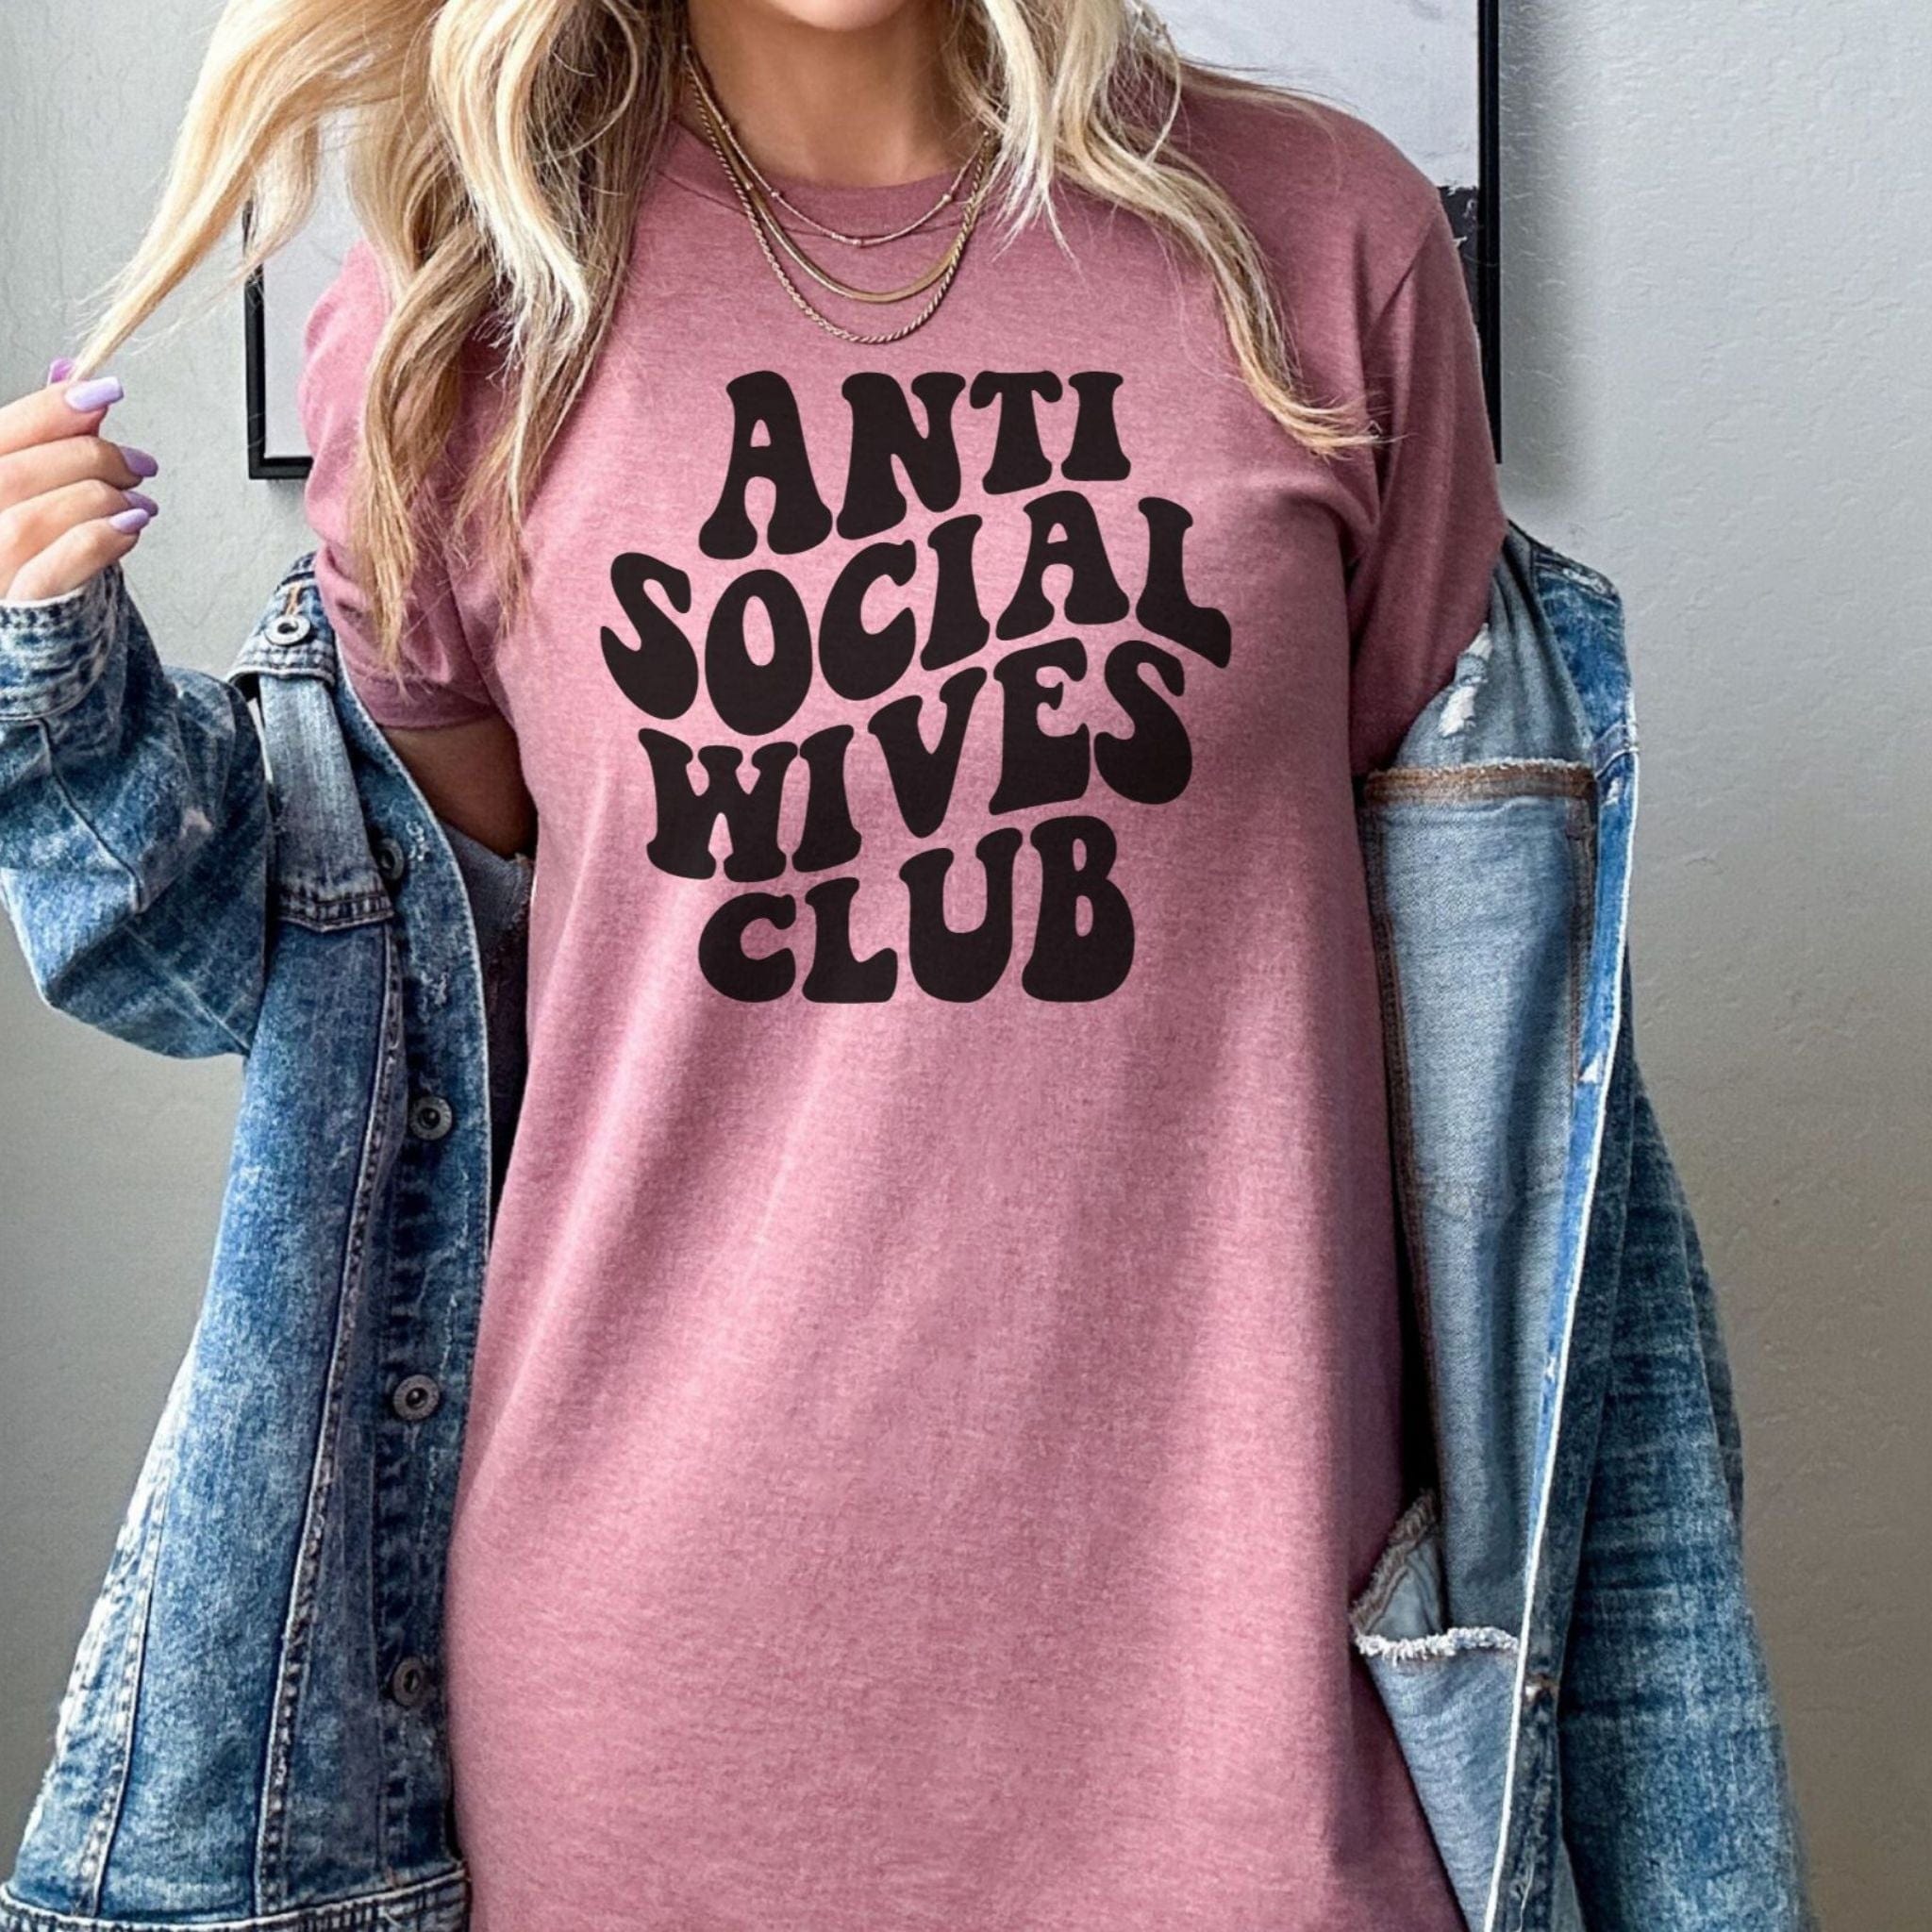 Anti Social T-Shirt